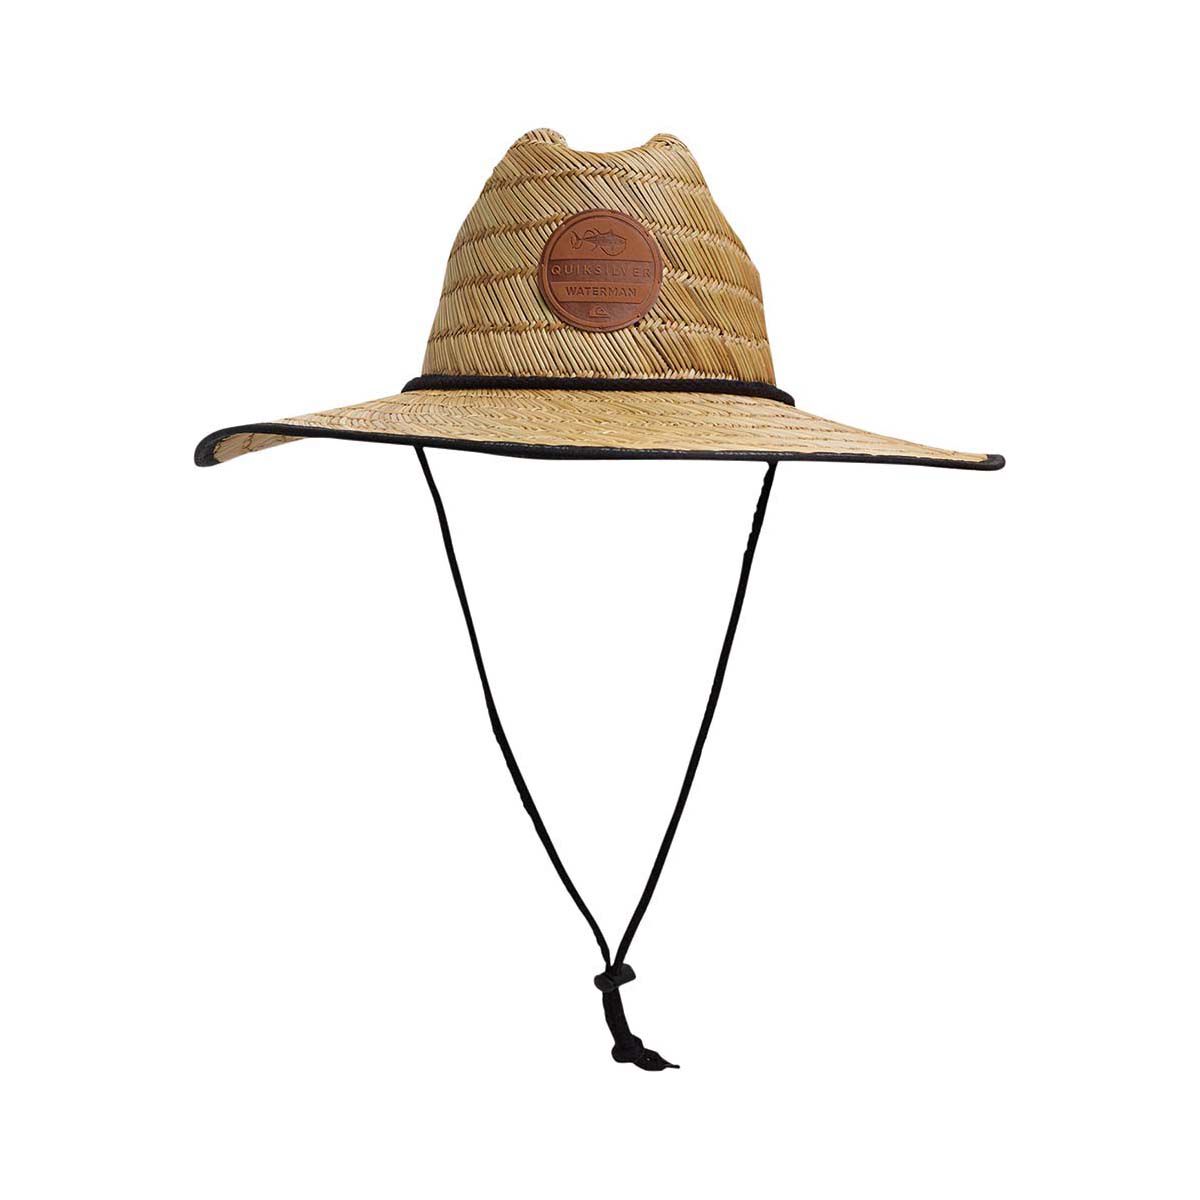 Quiksilver Waterman Men's Dredge Straw Hat Natural L / XL